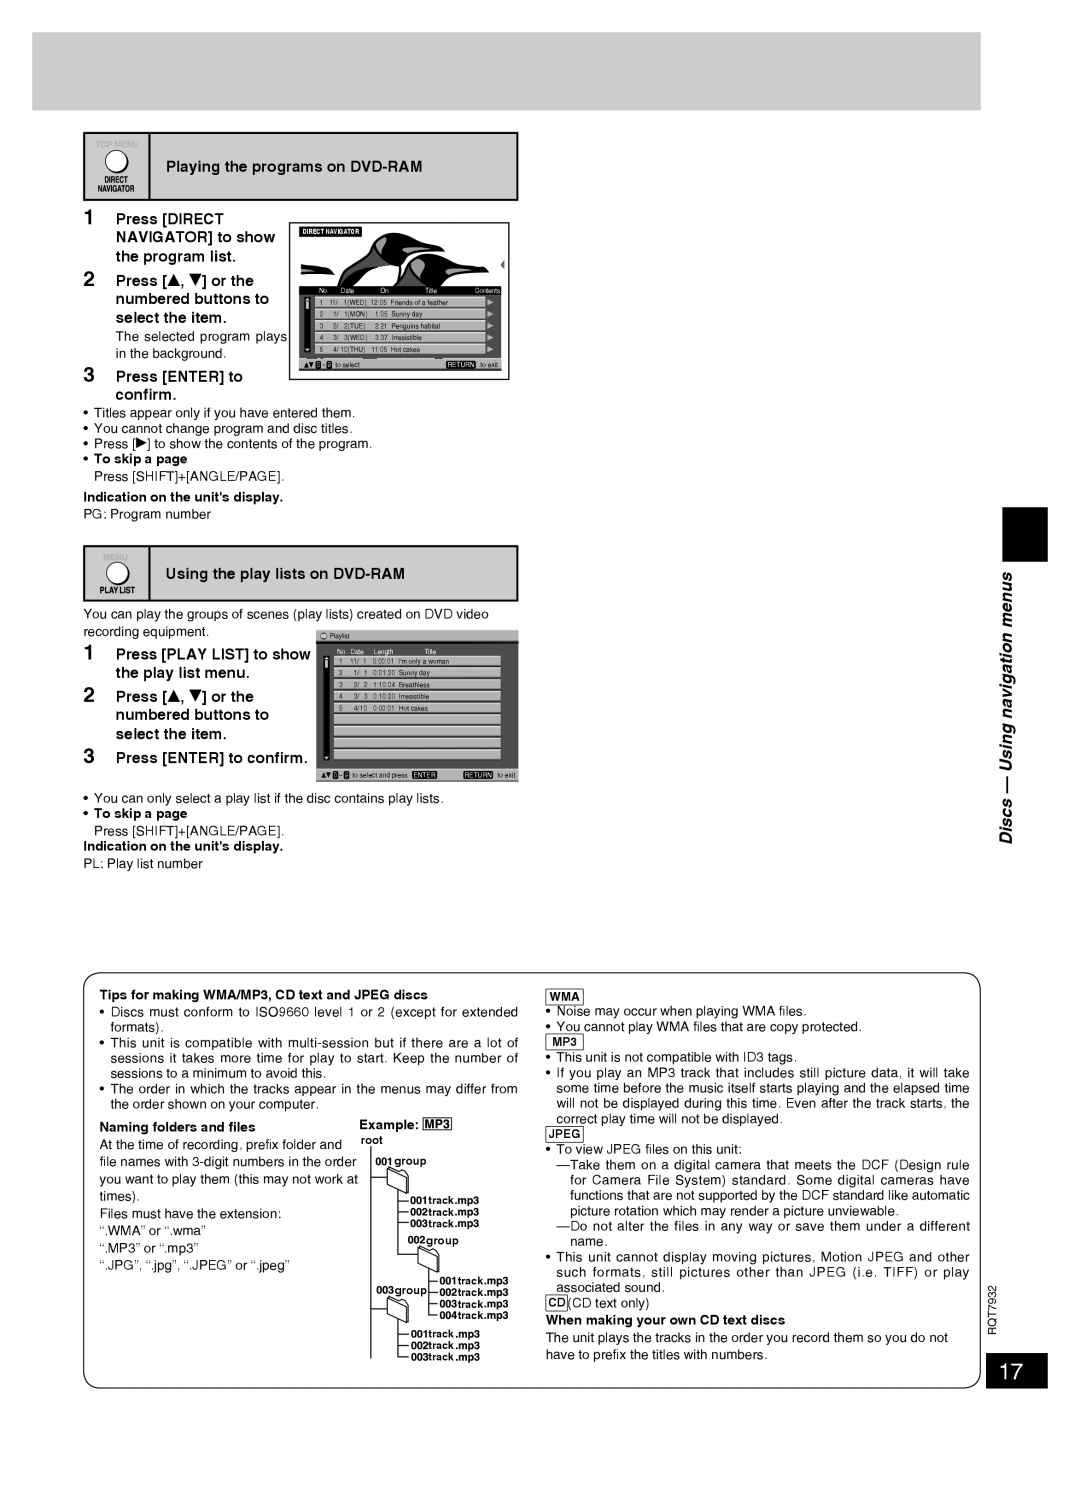 Panasonic SC-PM91D Discs - Using navigation menus, Press DIRECT NAVIGATOR to show the program list, To skip a page 